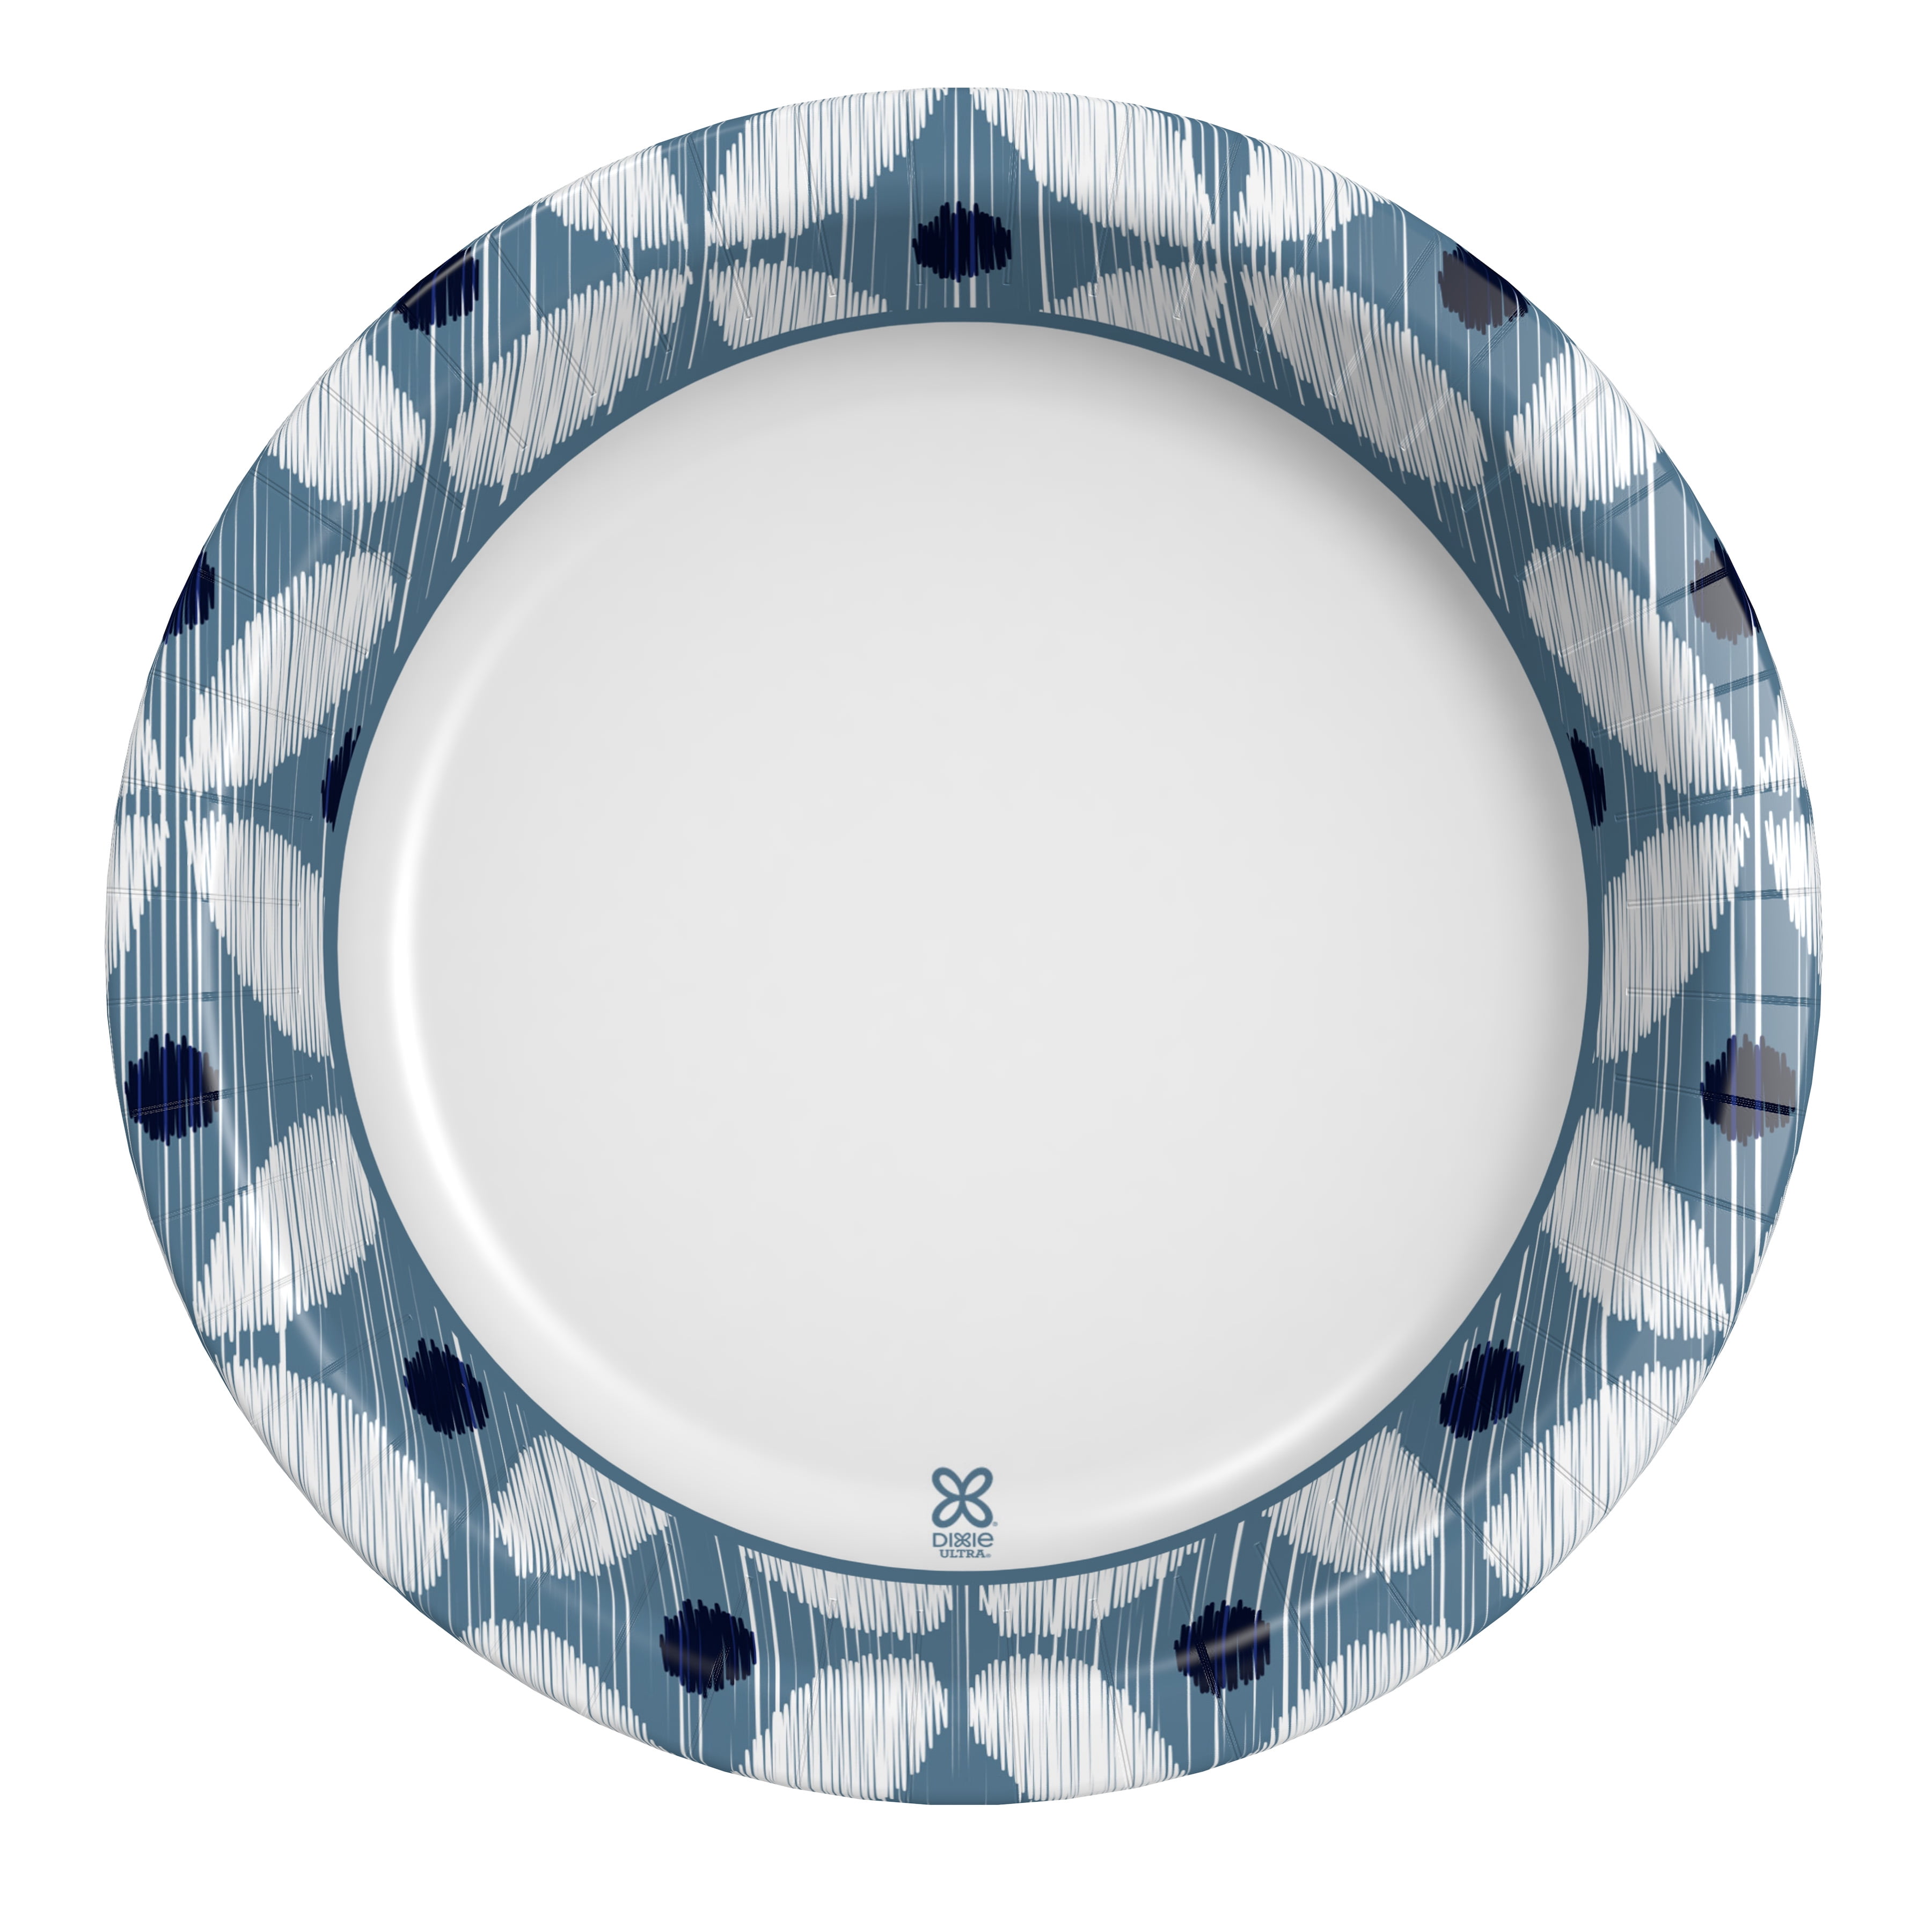 186 PLATES) DIXIE PAPER PLATE 10 WHITE/BLUE DESIGN DIXIE HEAVY